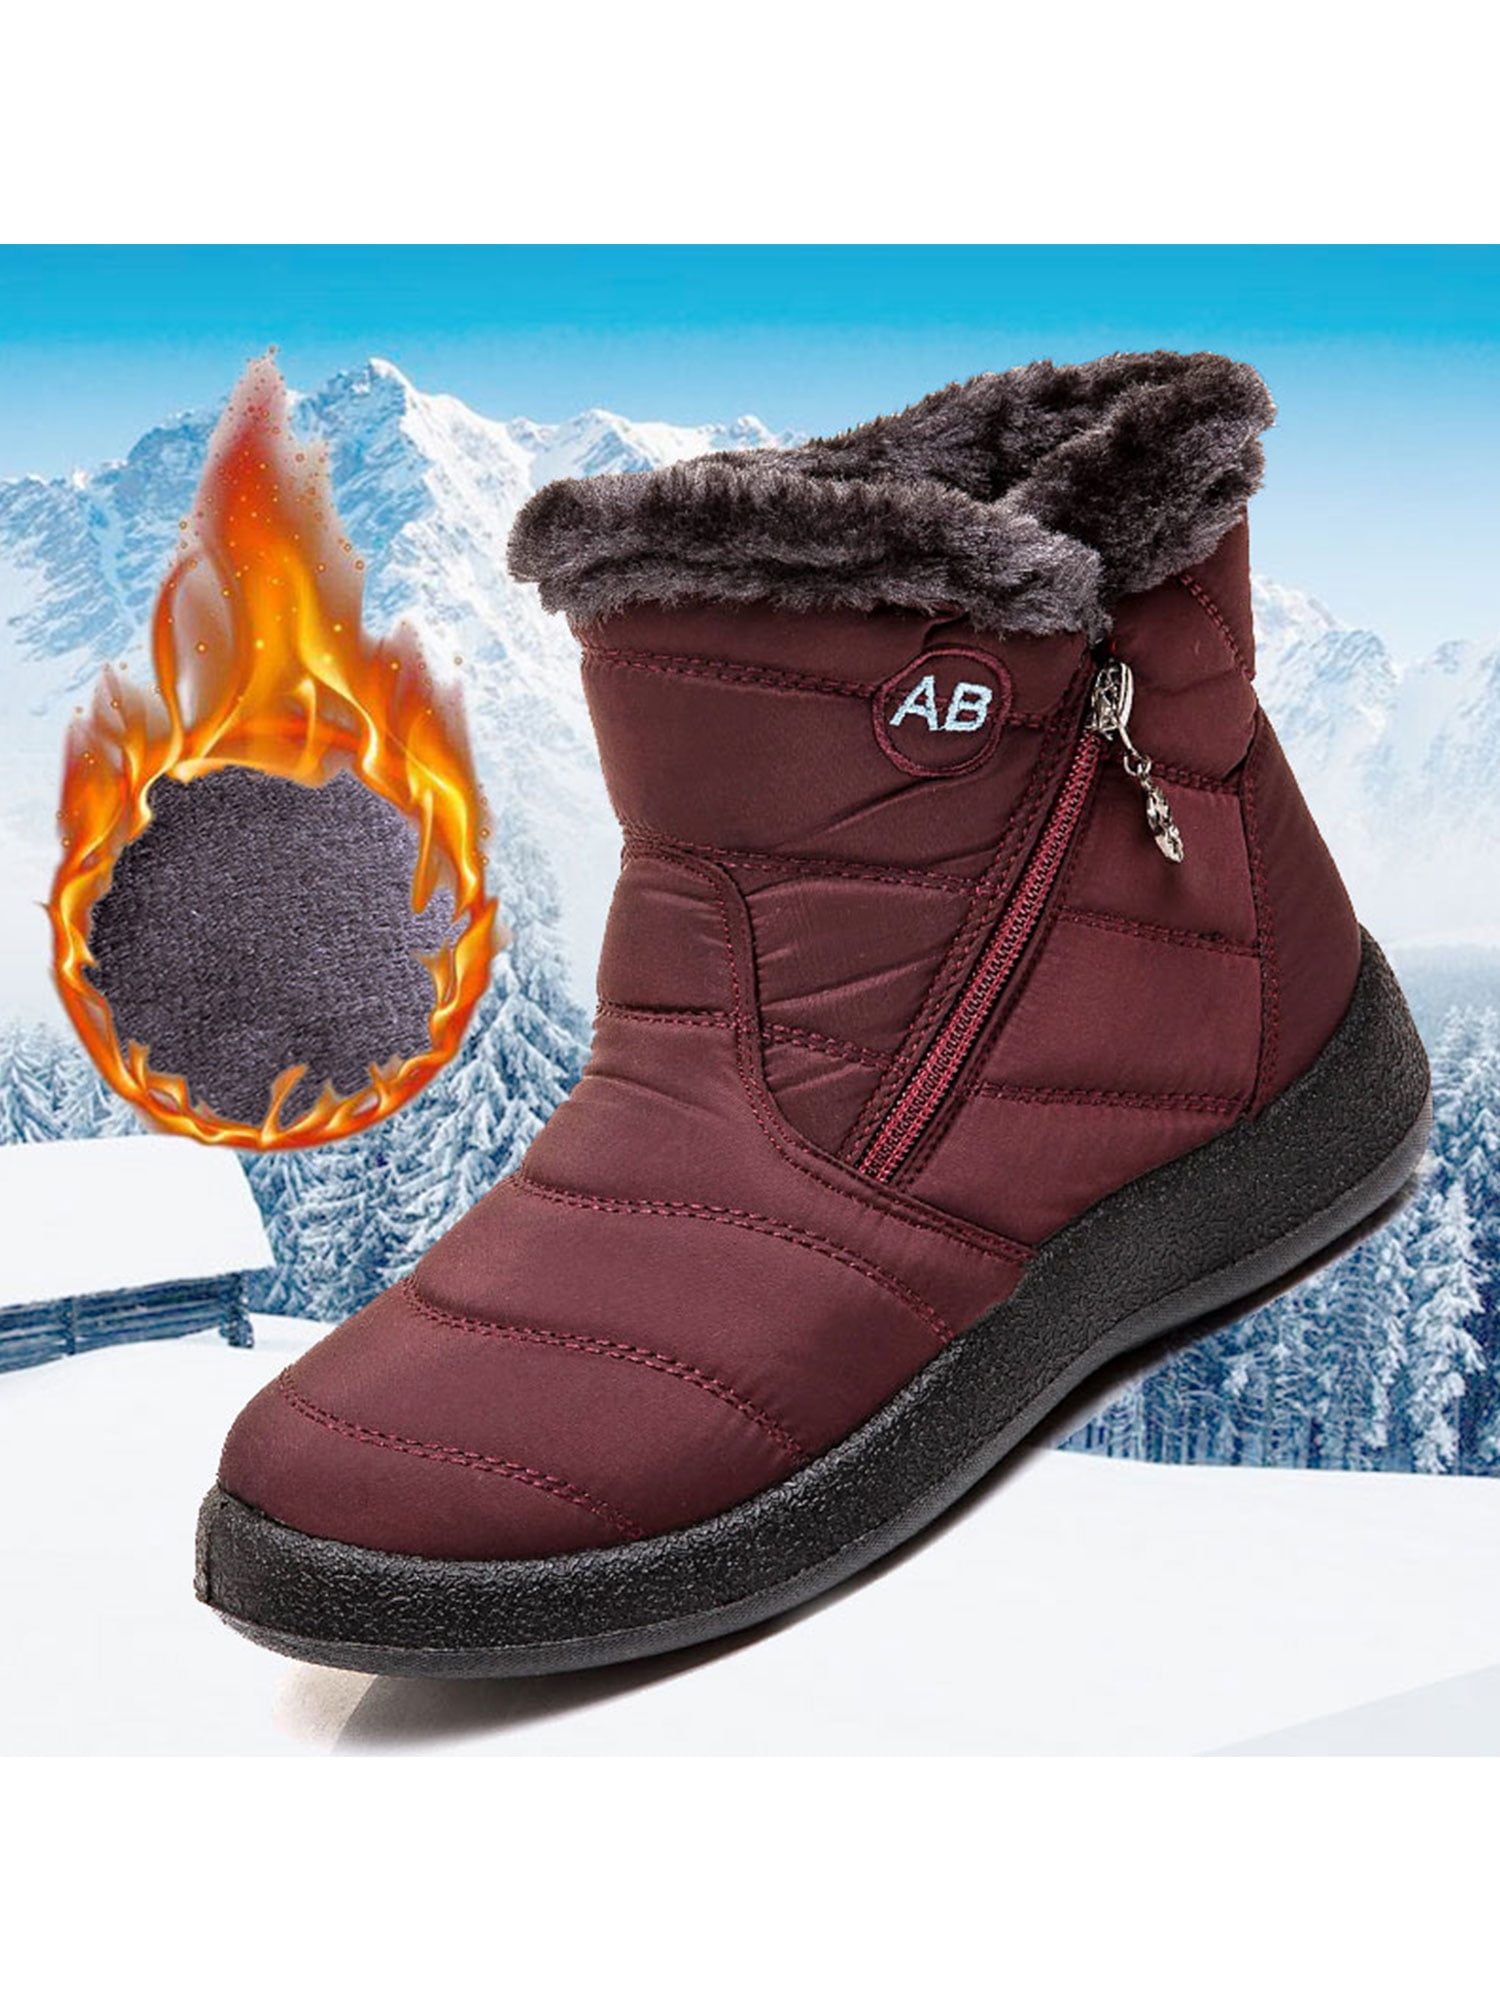 Women's Waterproof Winter Snow Boots Ladies Warm Slip On Ankle Booties